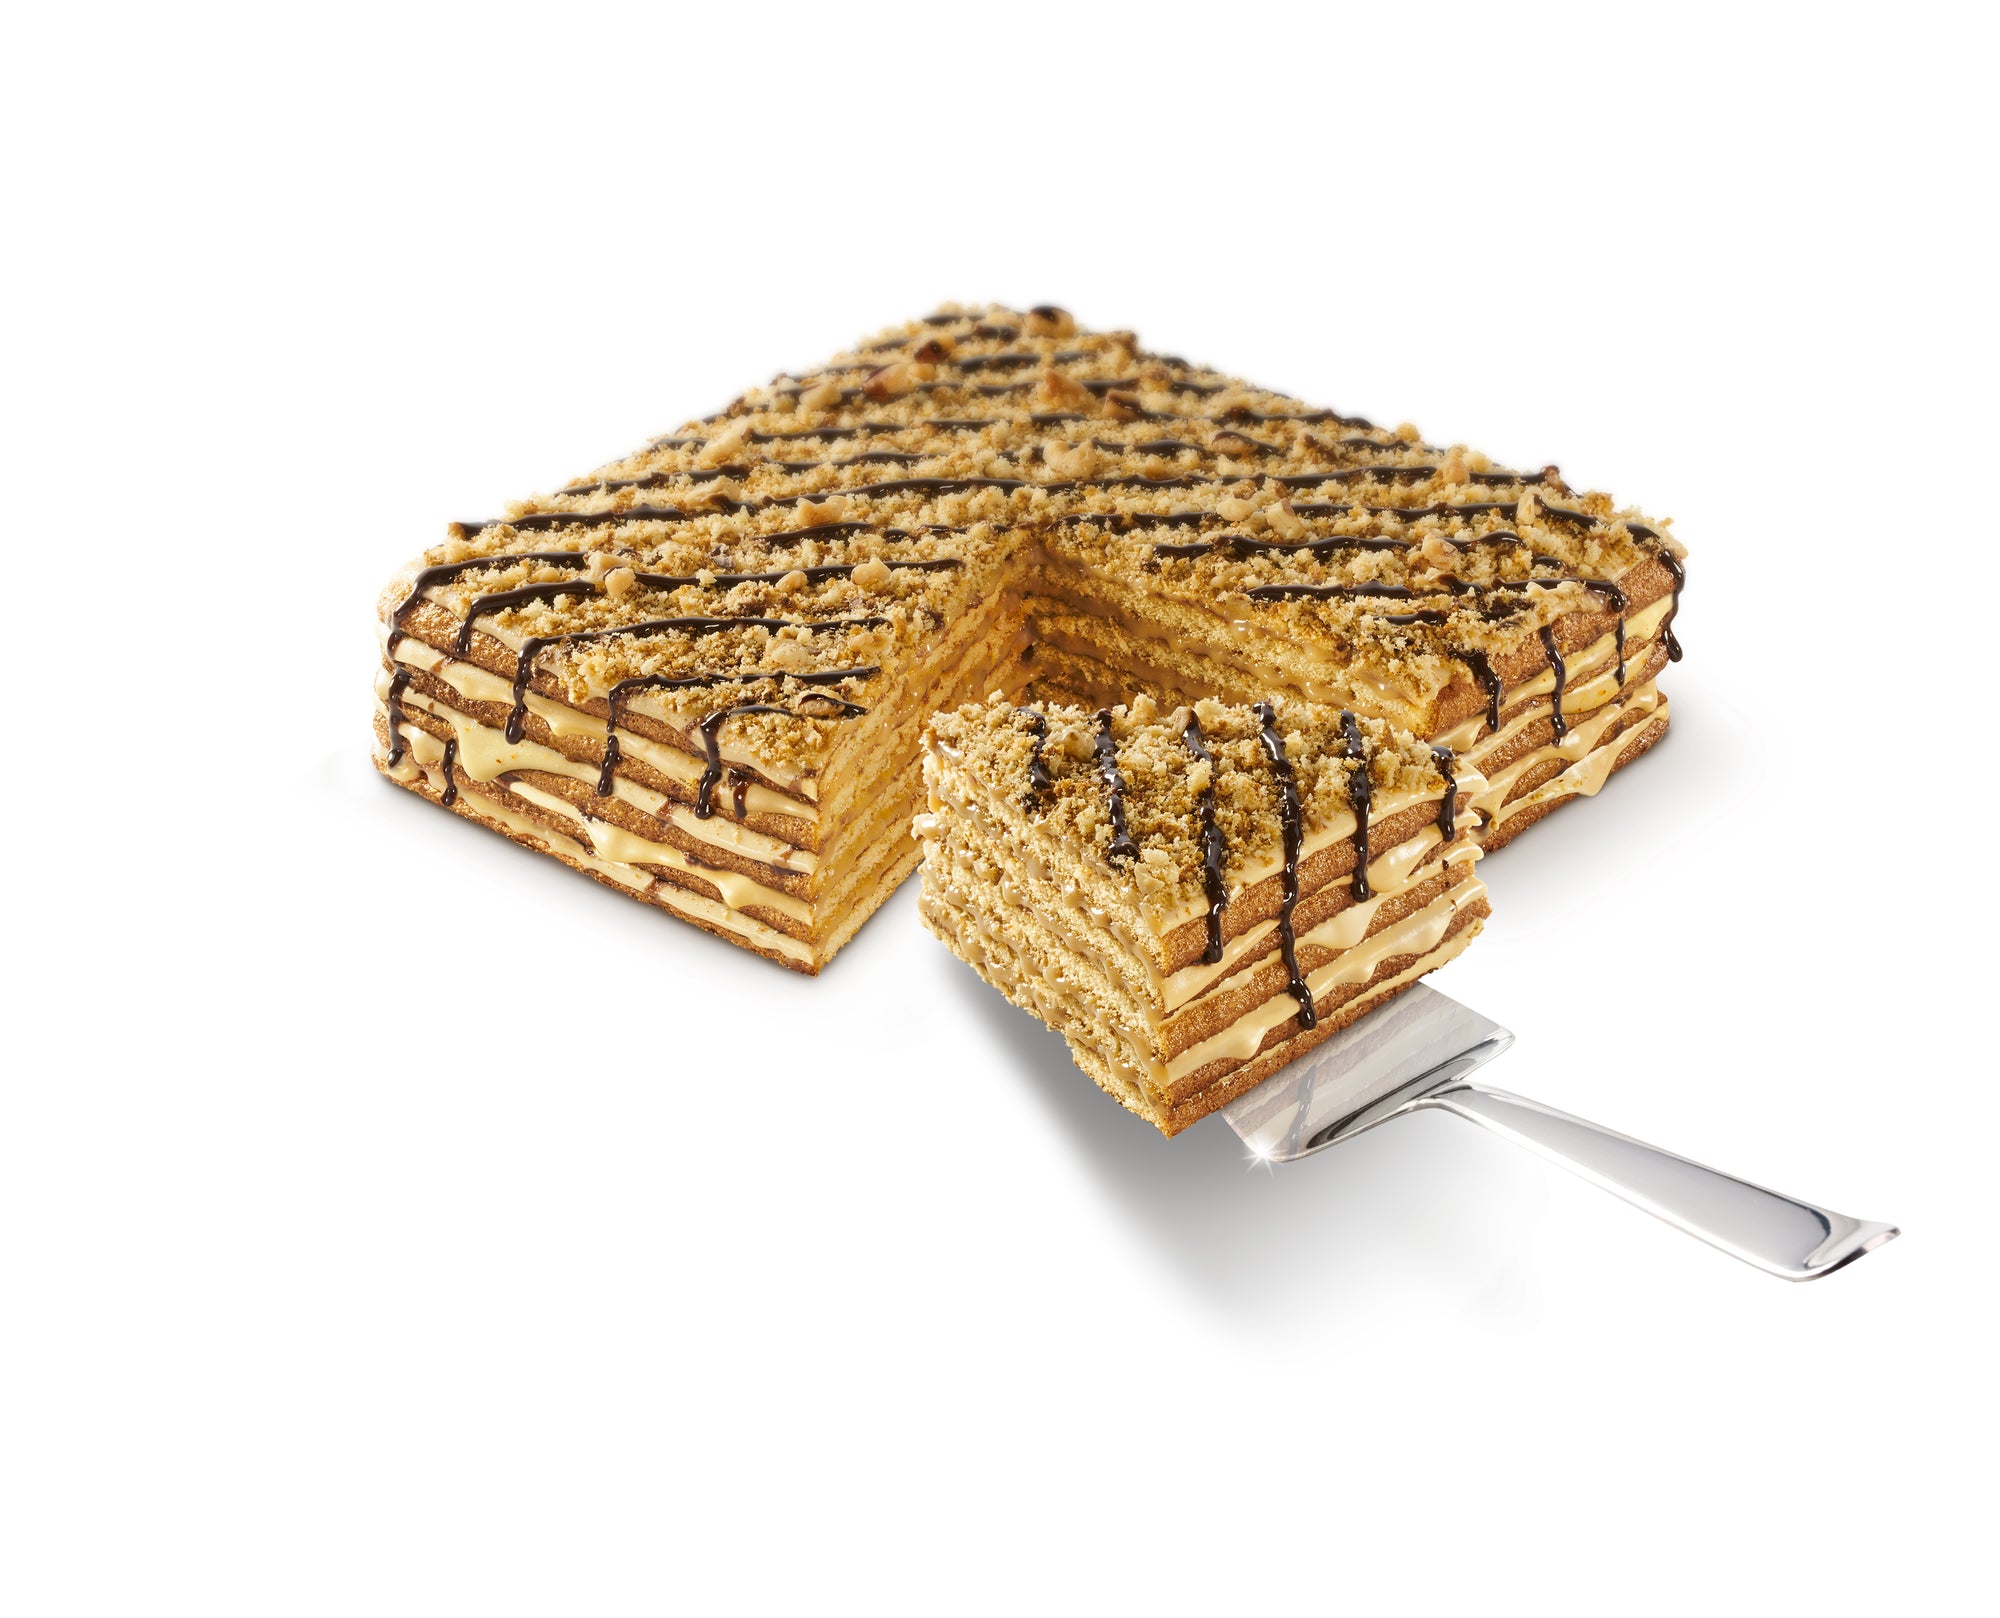 Gluten-Free Honey Cake with walnuts - MARLENKA Enterprises